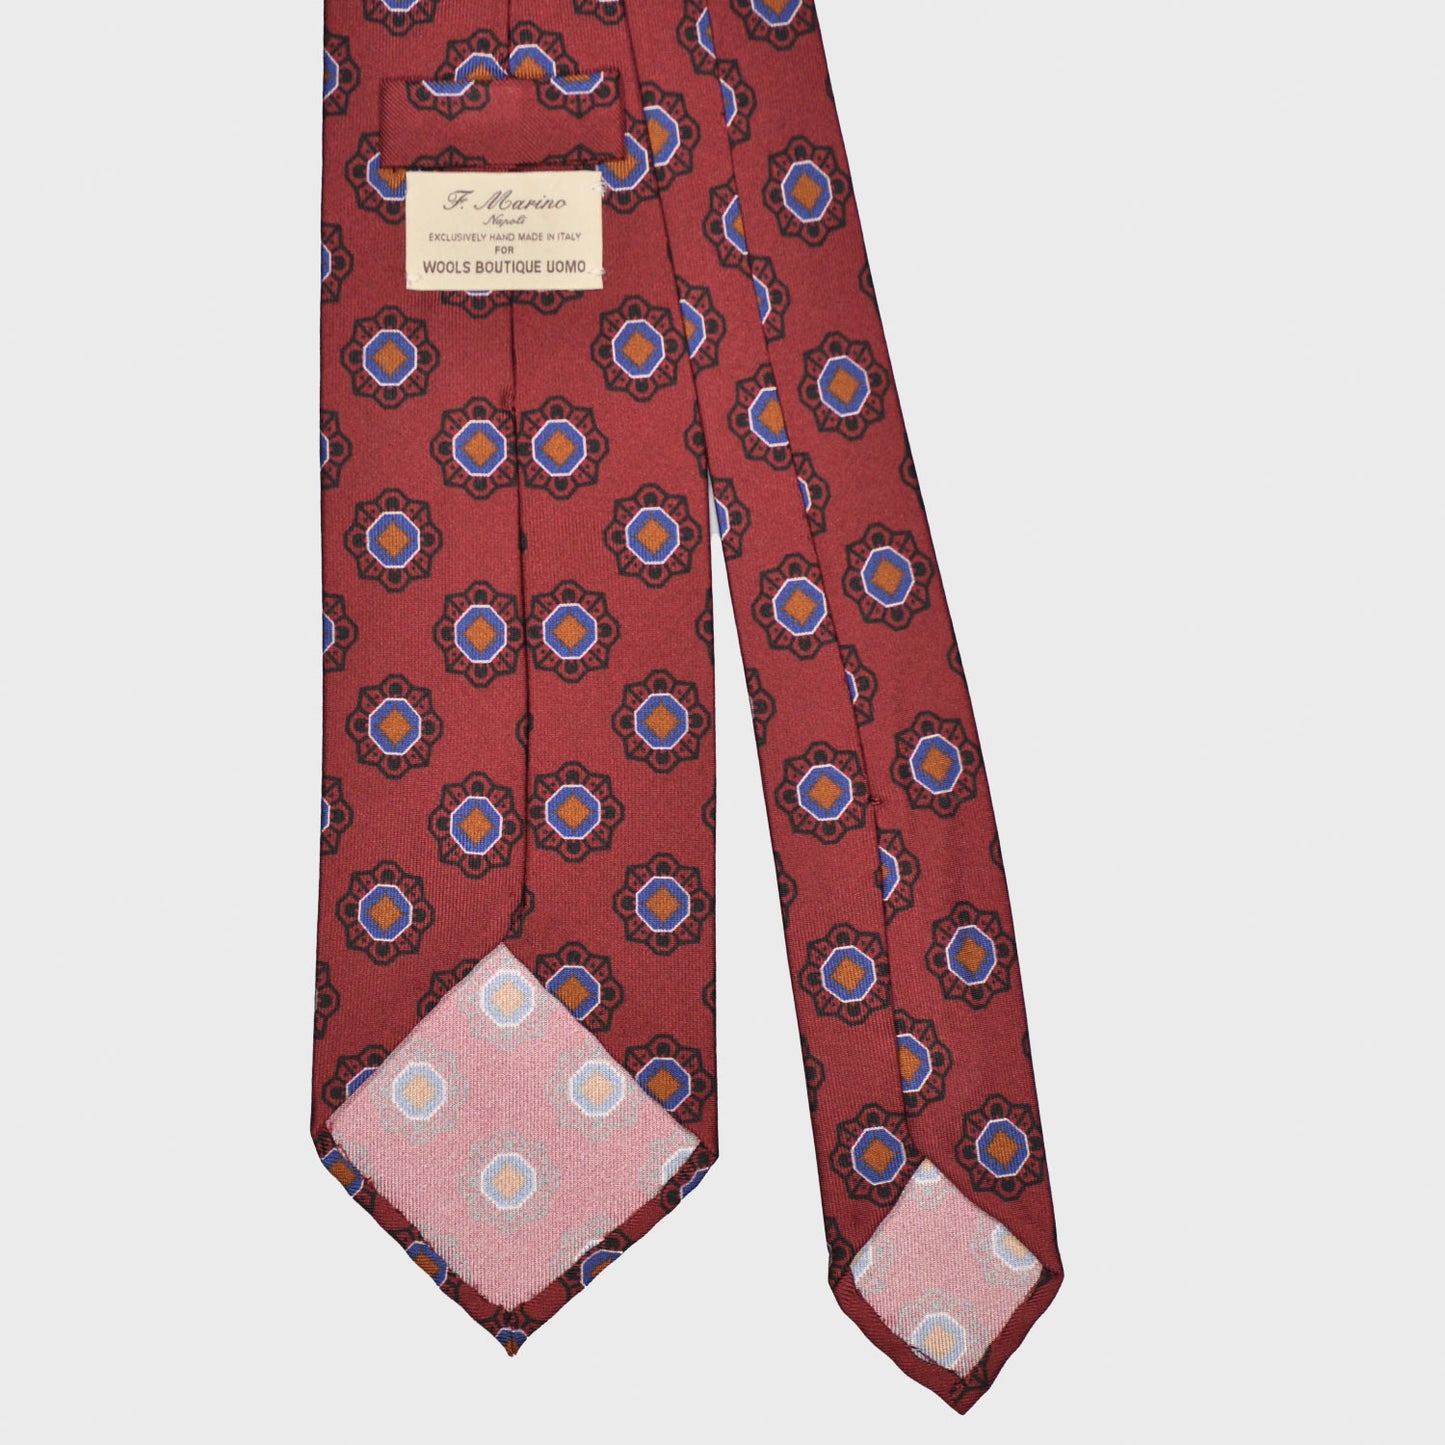 F.Marino Silk Tie 3 Folds Geometric Flower Brick Red-Wools Boutique Uomo